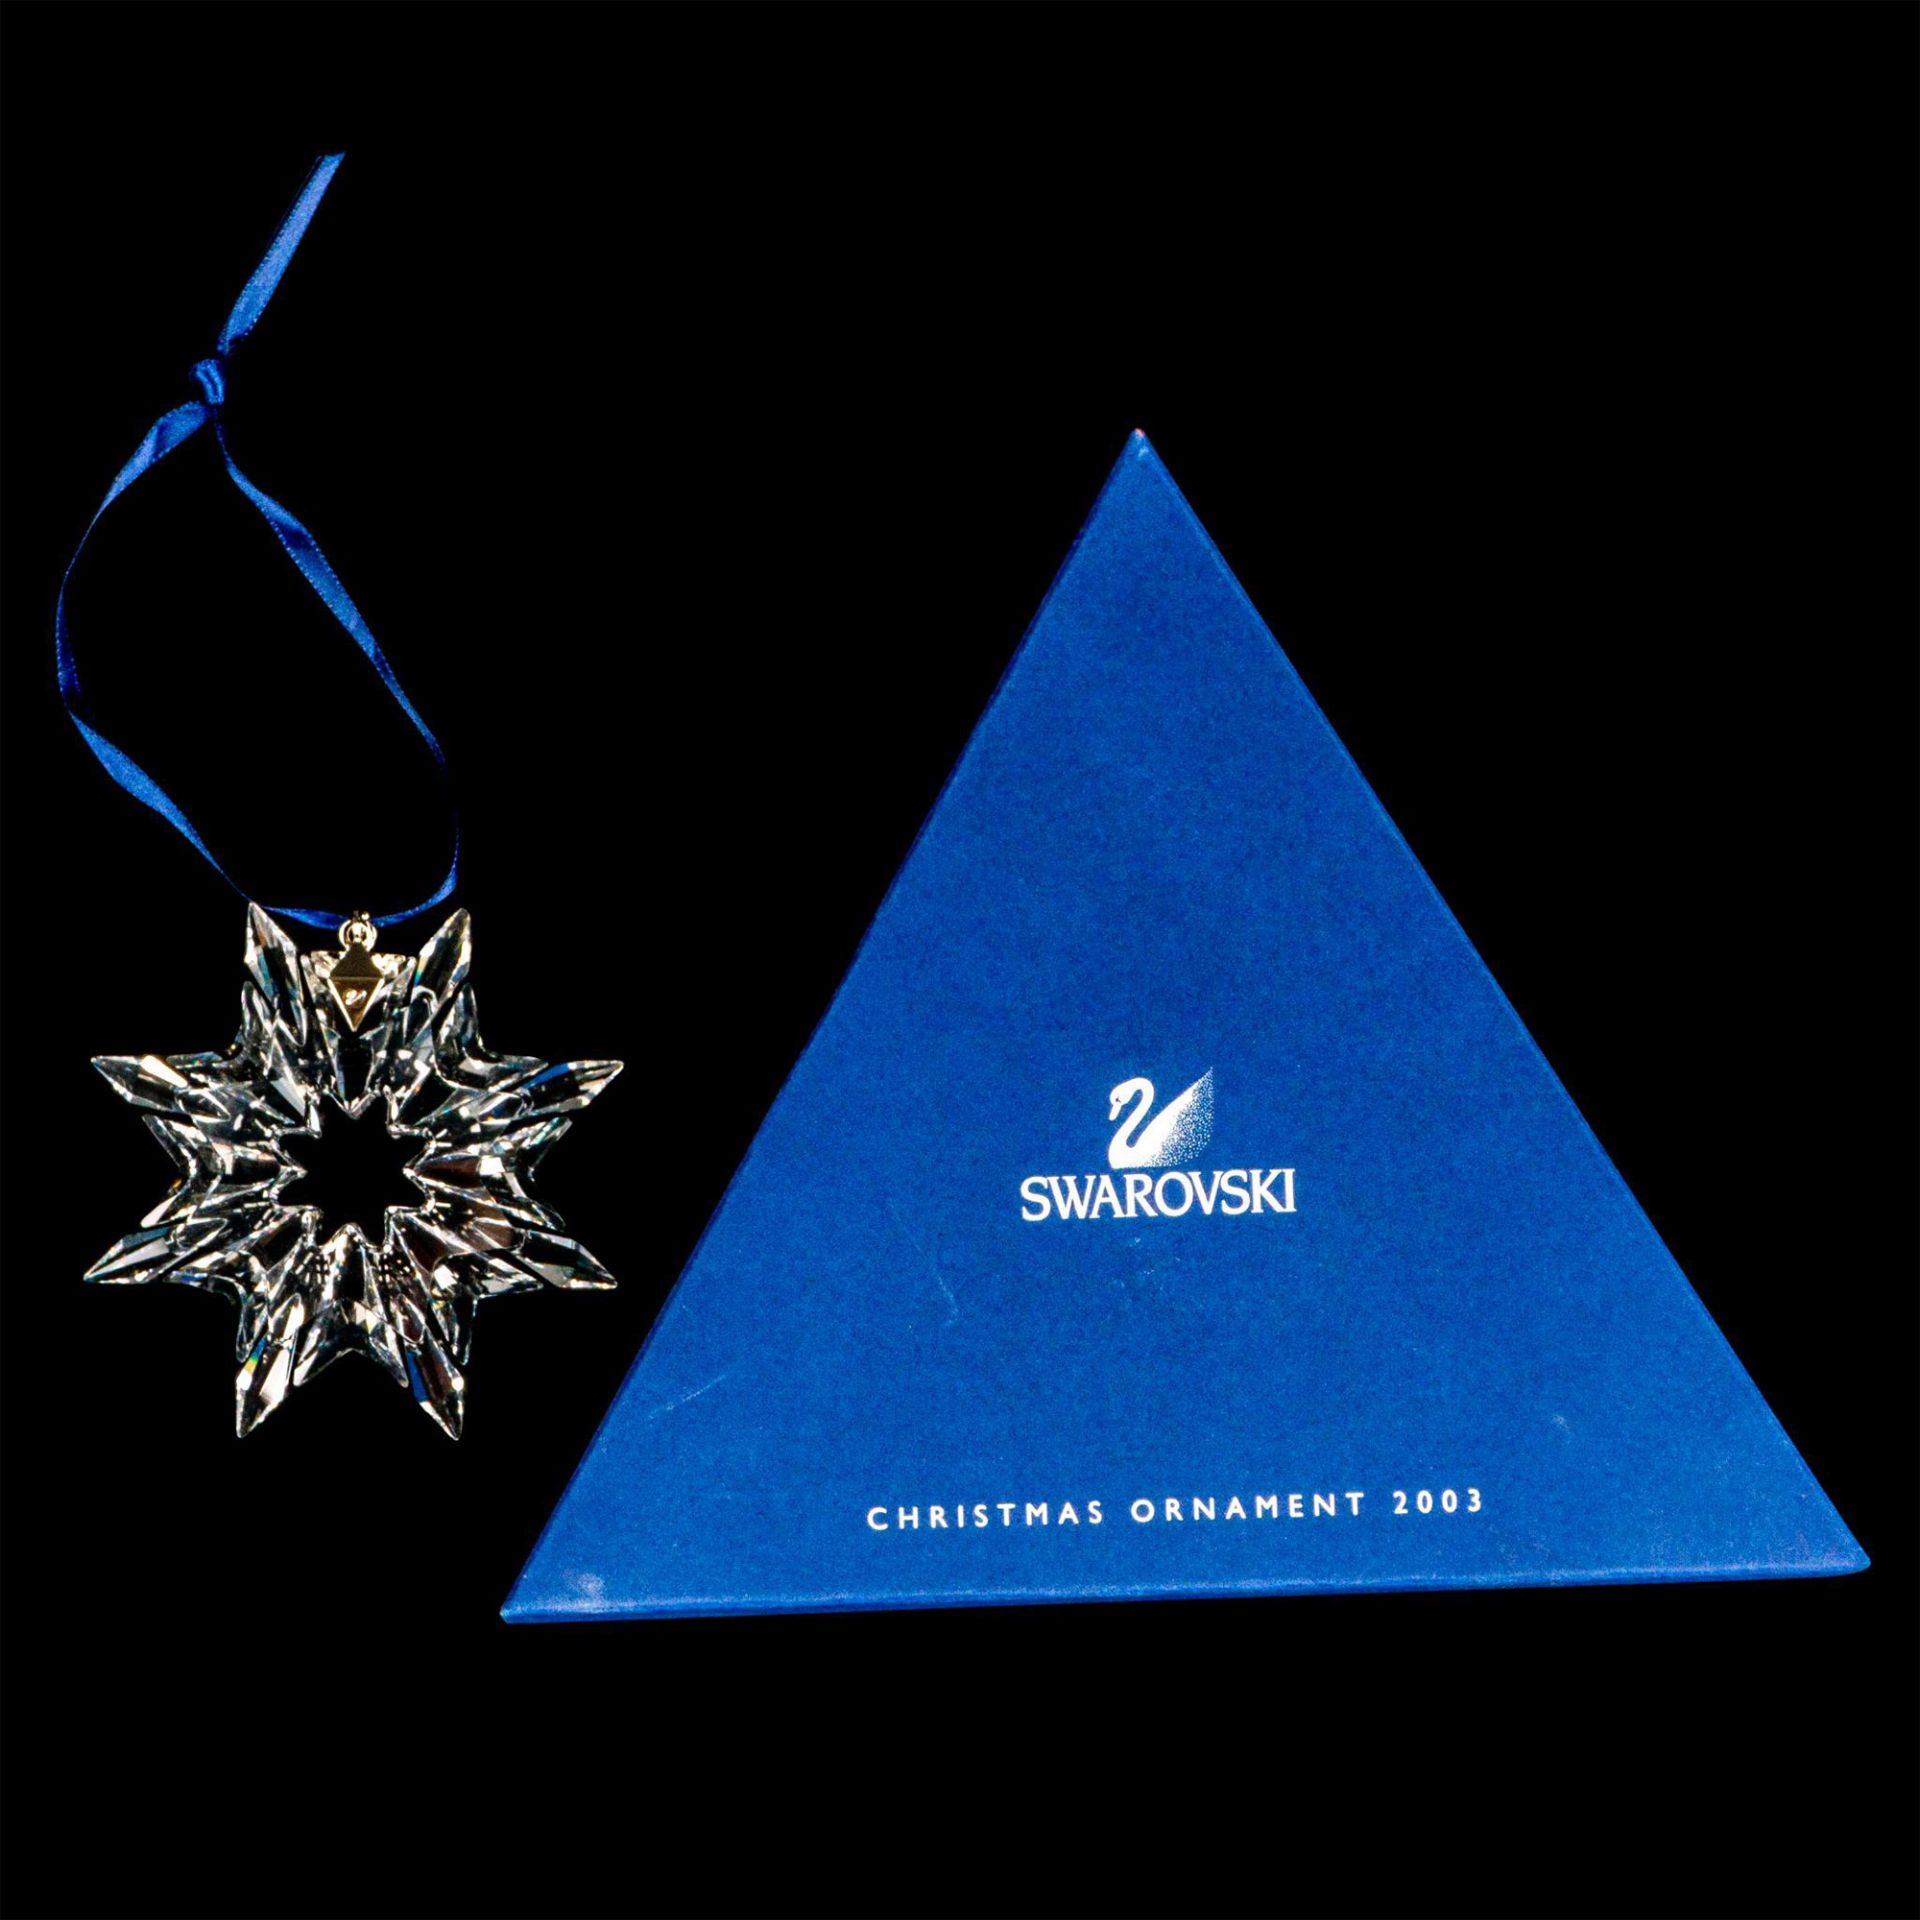 Swarovski Crystal Holiday Ornament 2003 - Image 2 of 2